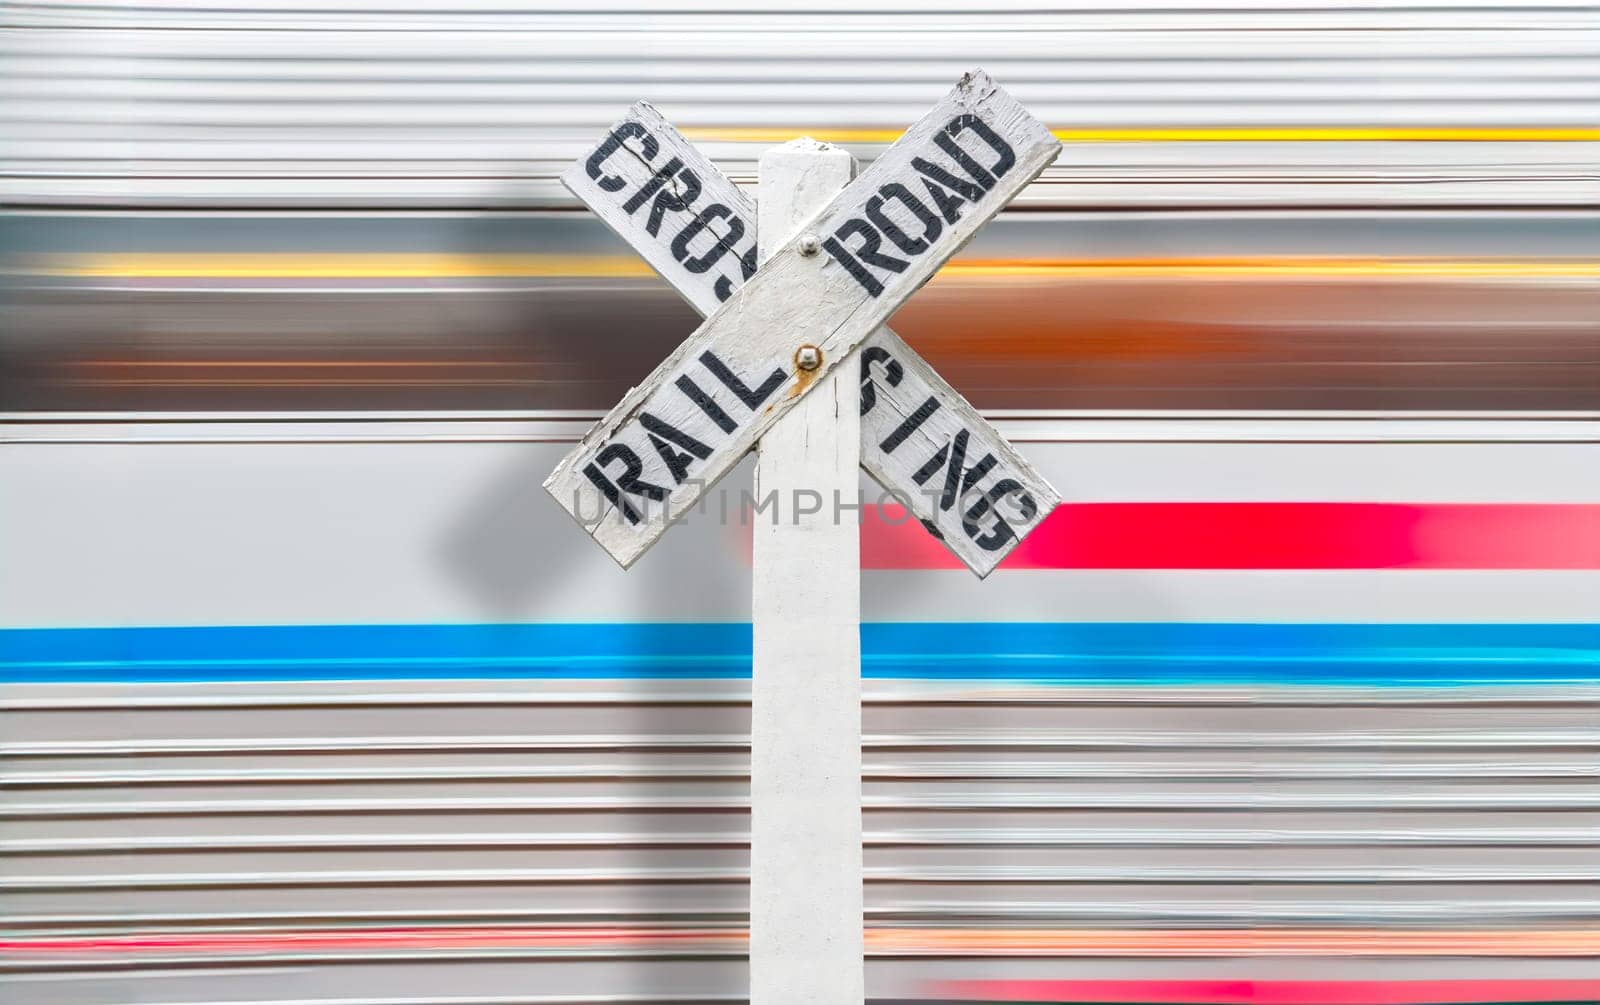 Train Speeding Past A Railroad Crossing Sign by mrdoomits